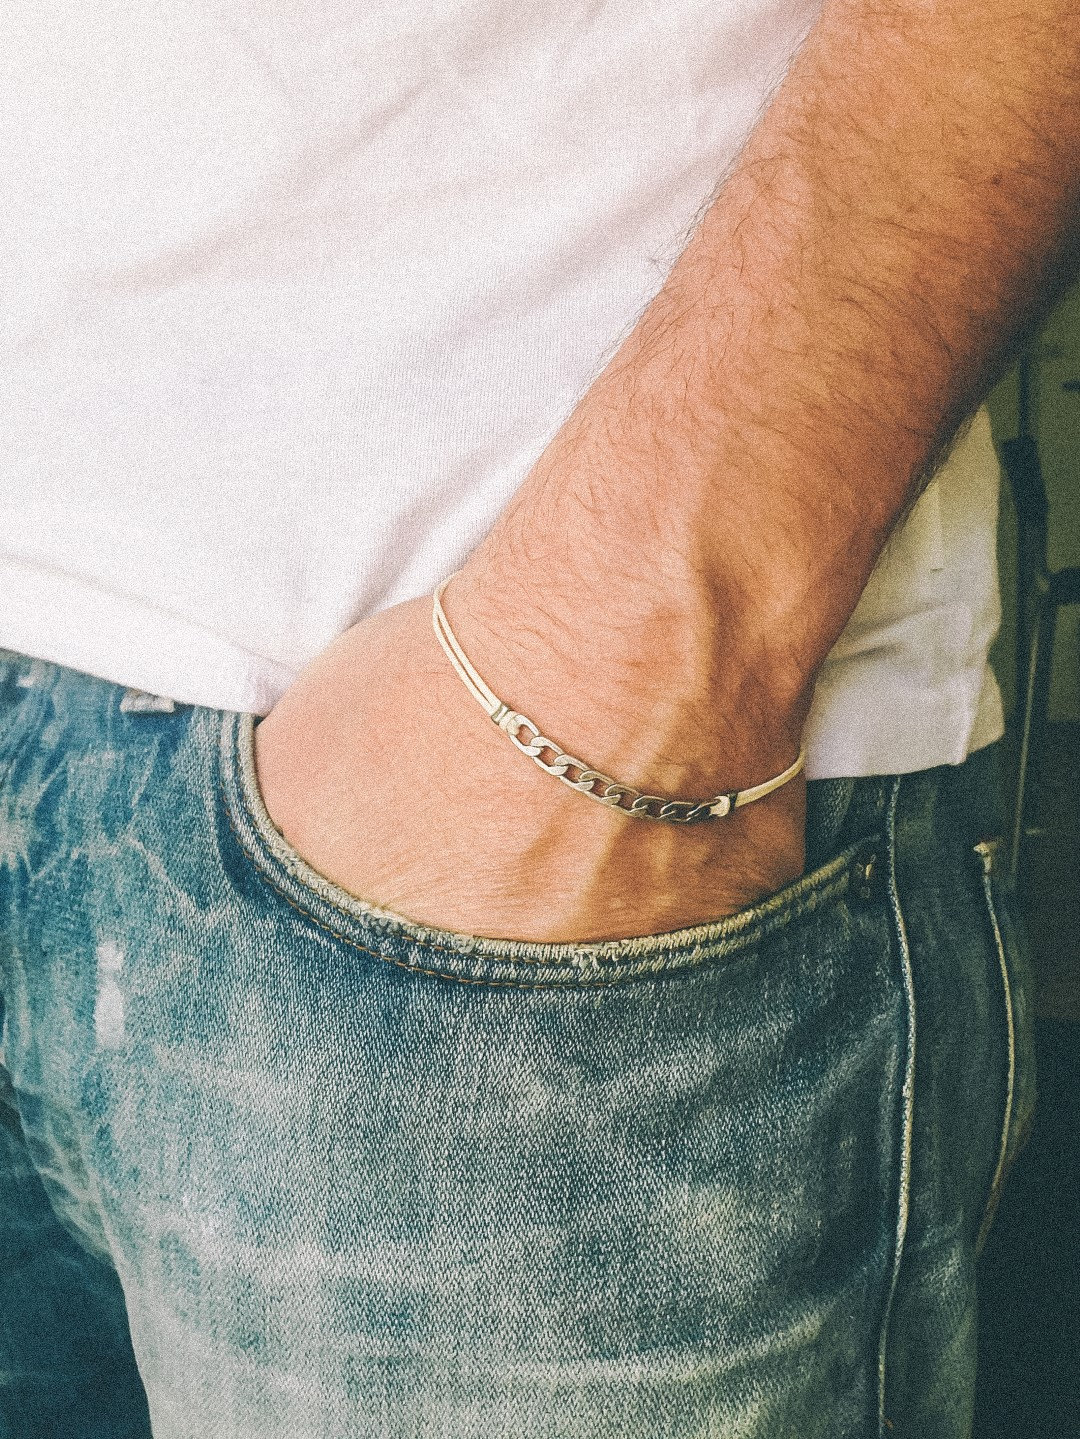 Bracelet For Men, Silver Flat Link Chain With A Beige Cord, Groomsmen Gift, Mens Bracelet For Him, Yoga Bracelet. Men's Jewelry,